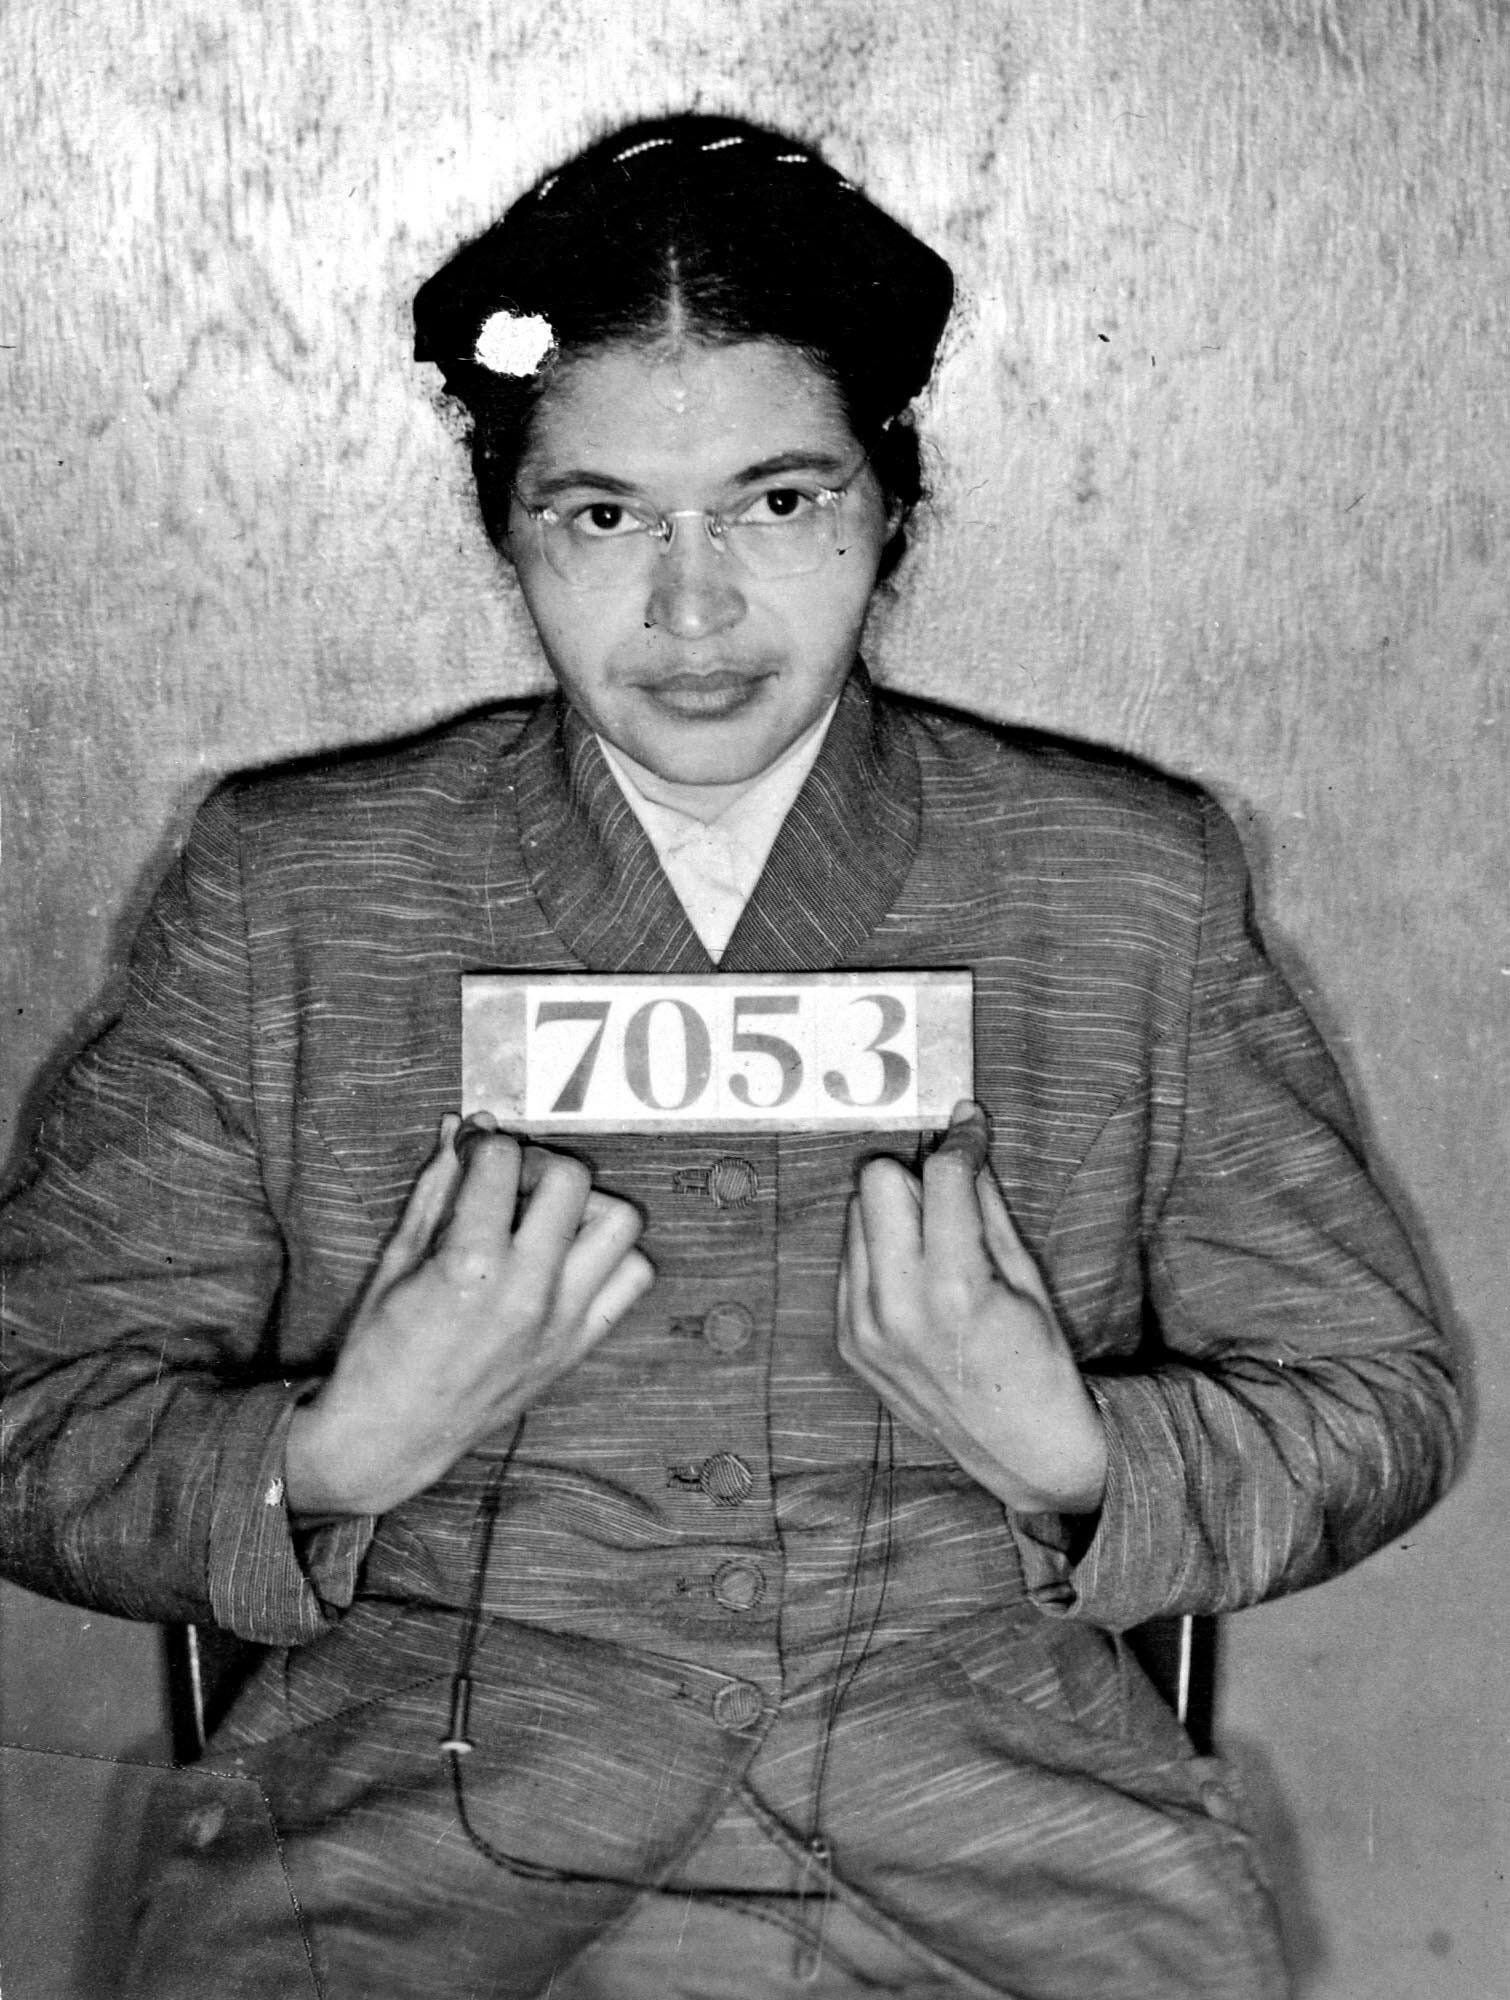 Rosa Parks' famous mugshot 